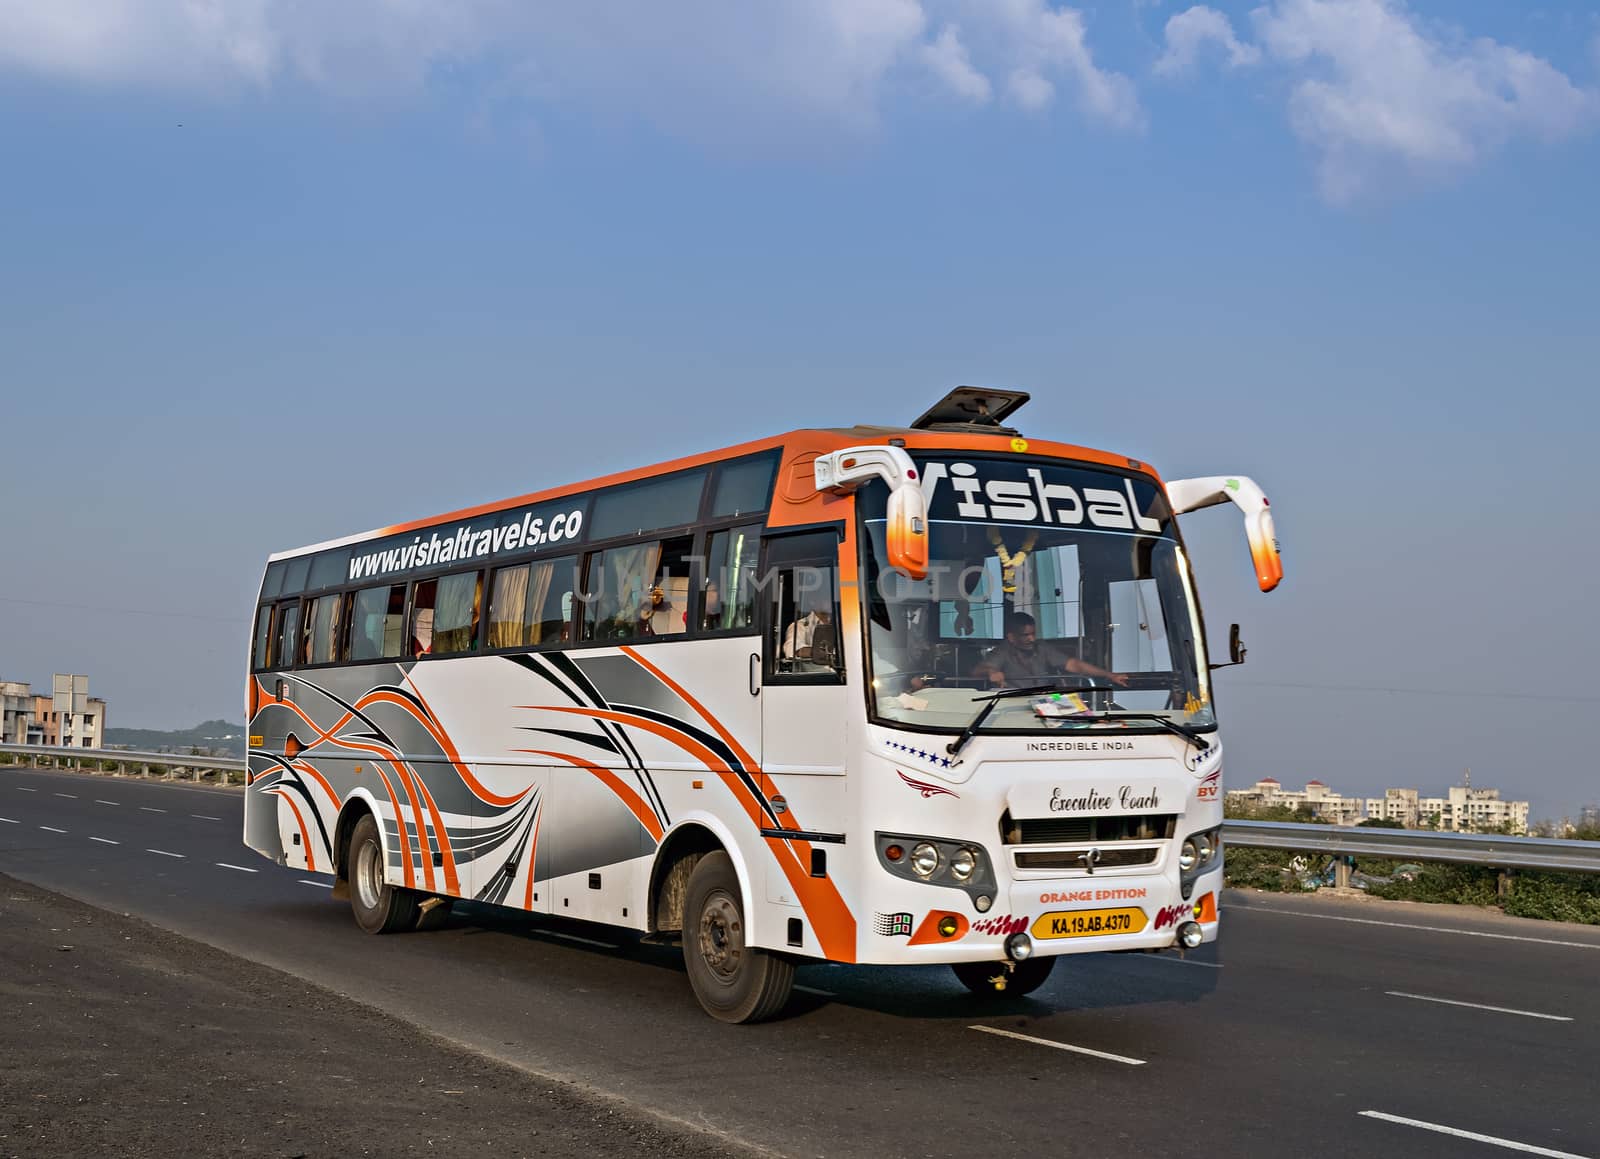 Pune, Maharashtra, India- October 25th, 2016: Vishal travels bus speeding on highway. by lalam